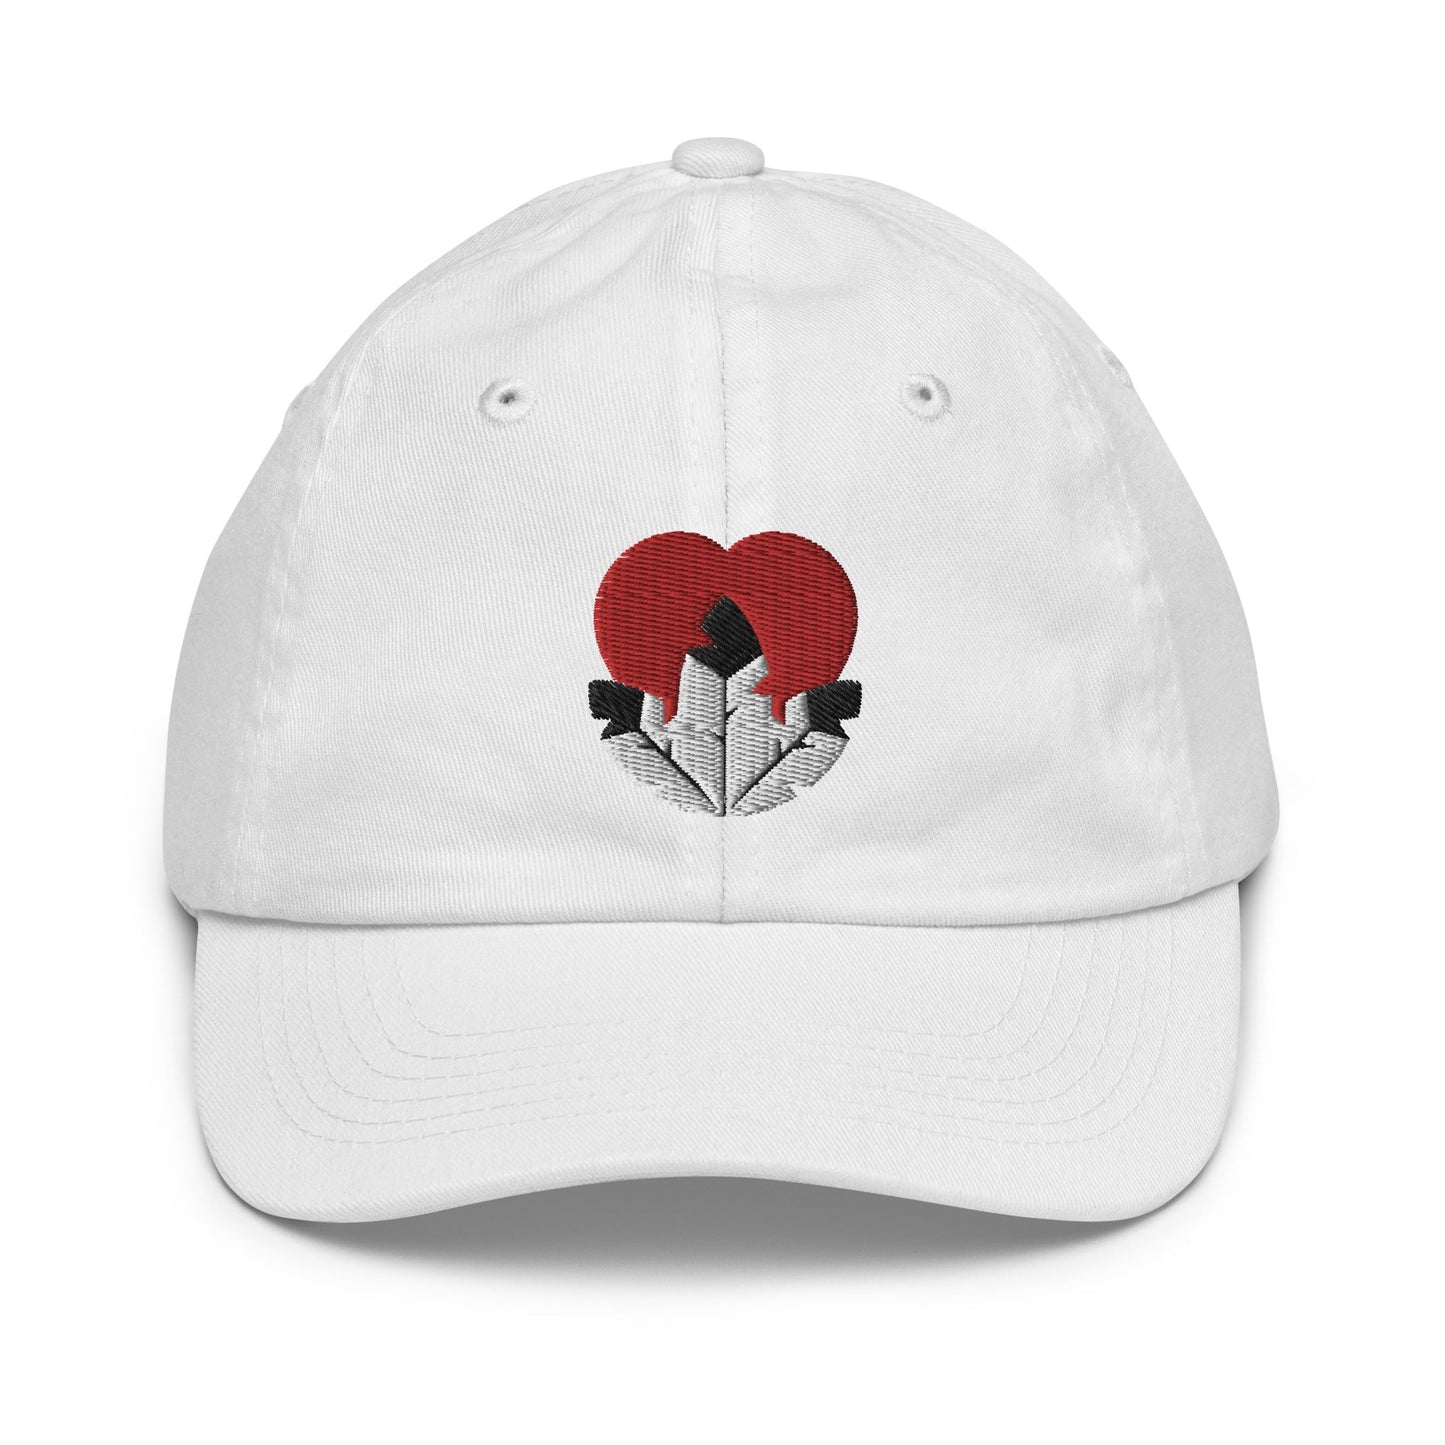 Youth baseball cap - Nikikw Designs